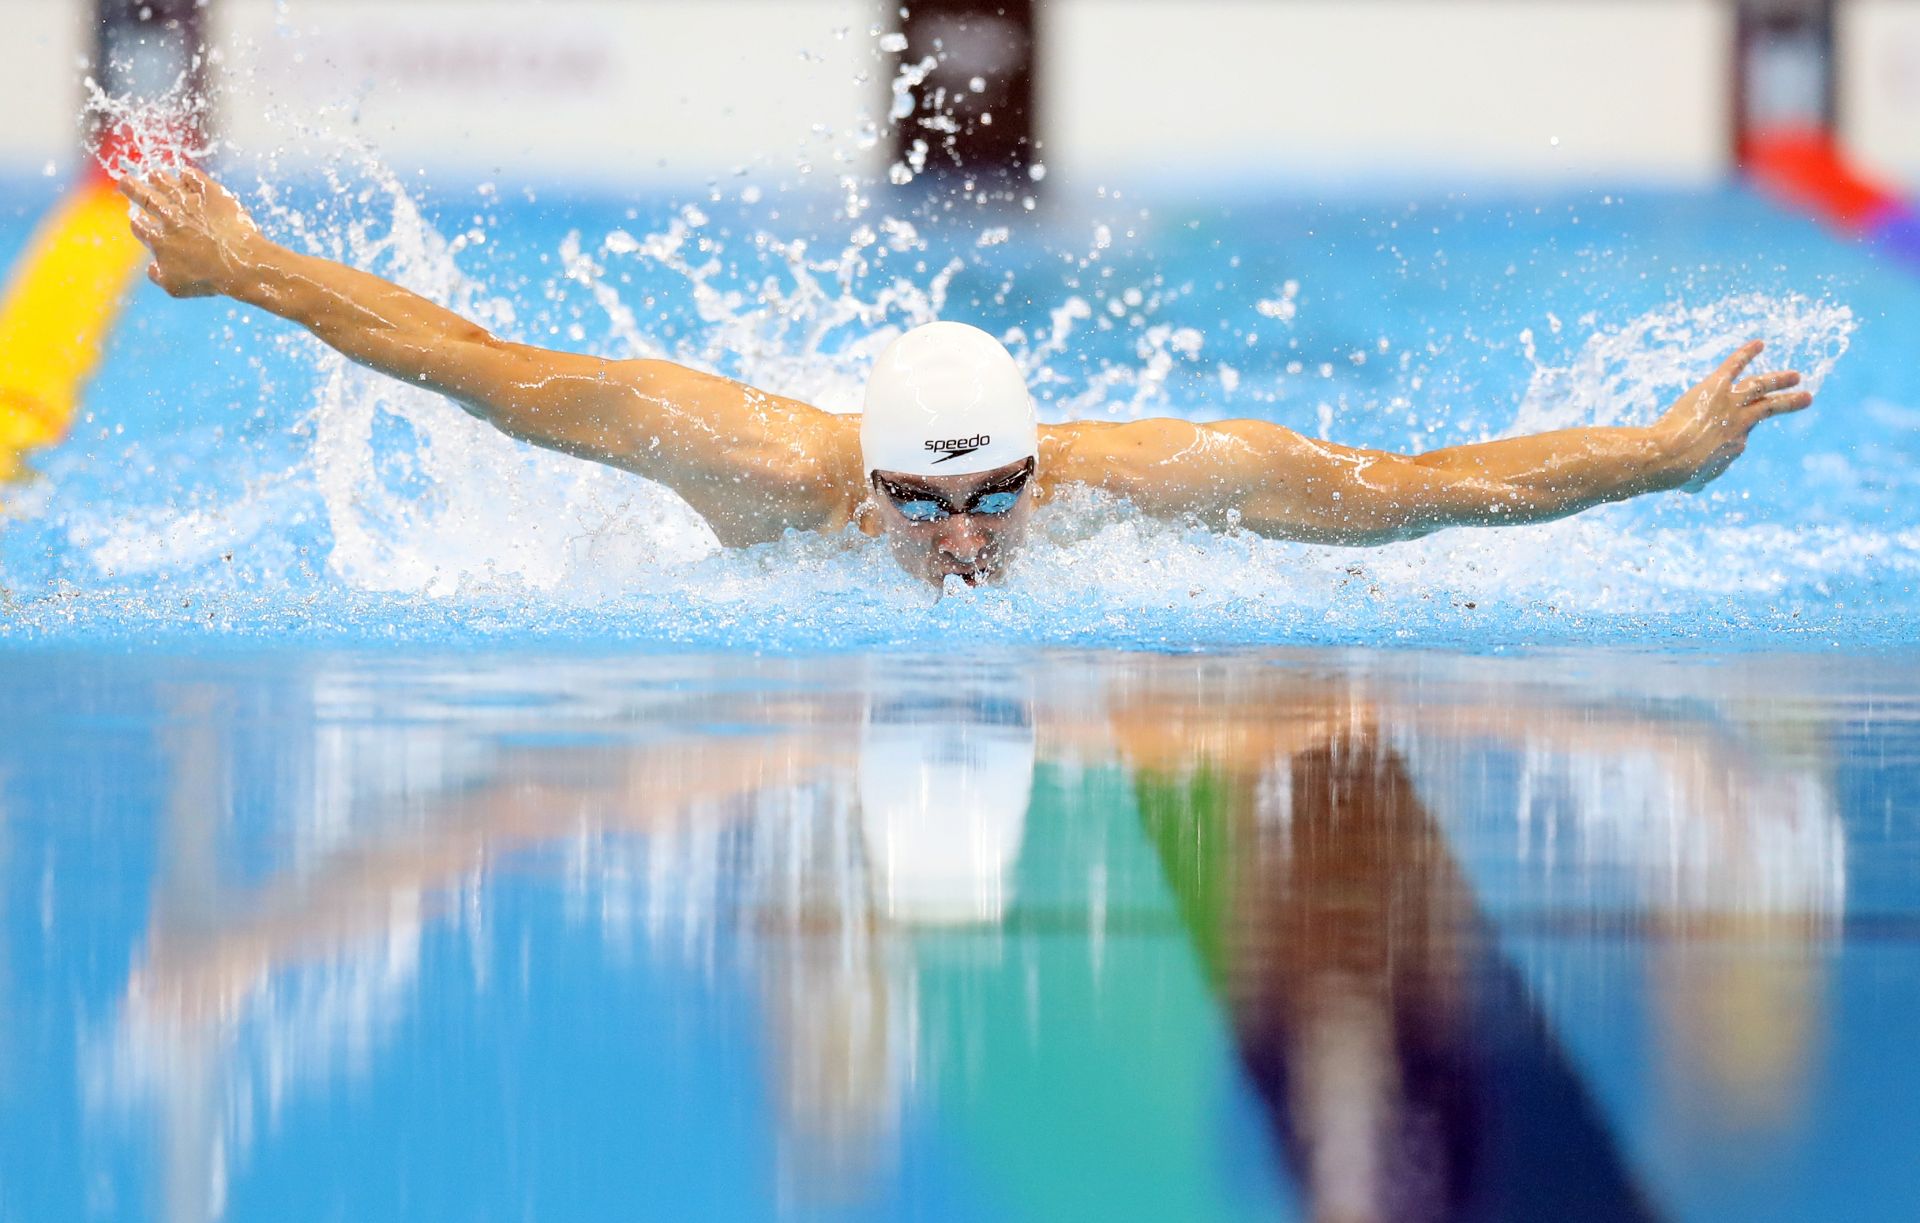 Rio de Janeiro, 16.09.2016 - Hrvatski plivaè Kristijan Vincetiæ tijekom finlane utrke na 100 metara delfin na Paraolimpijskim igrama u Rio de Janeiru.
foto HINA/ Damir SENÈAR /ds